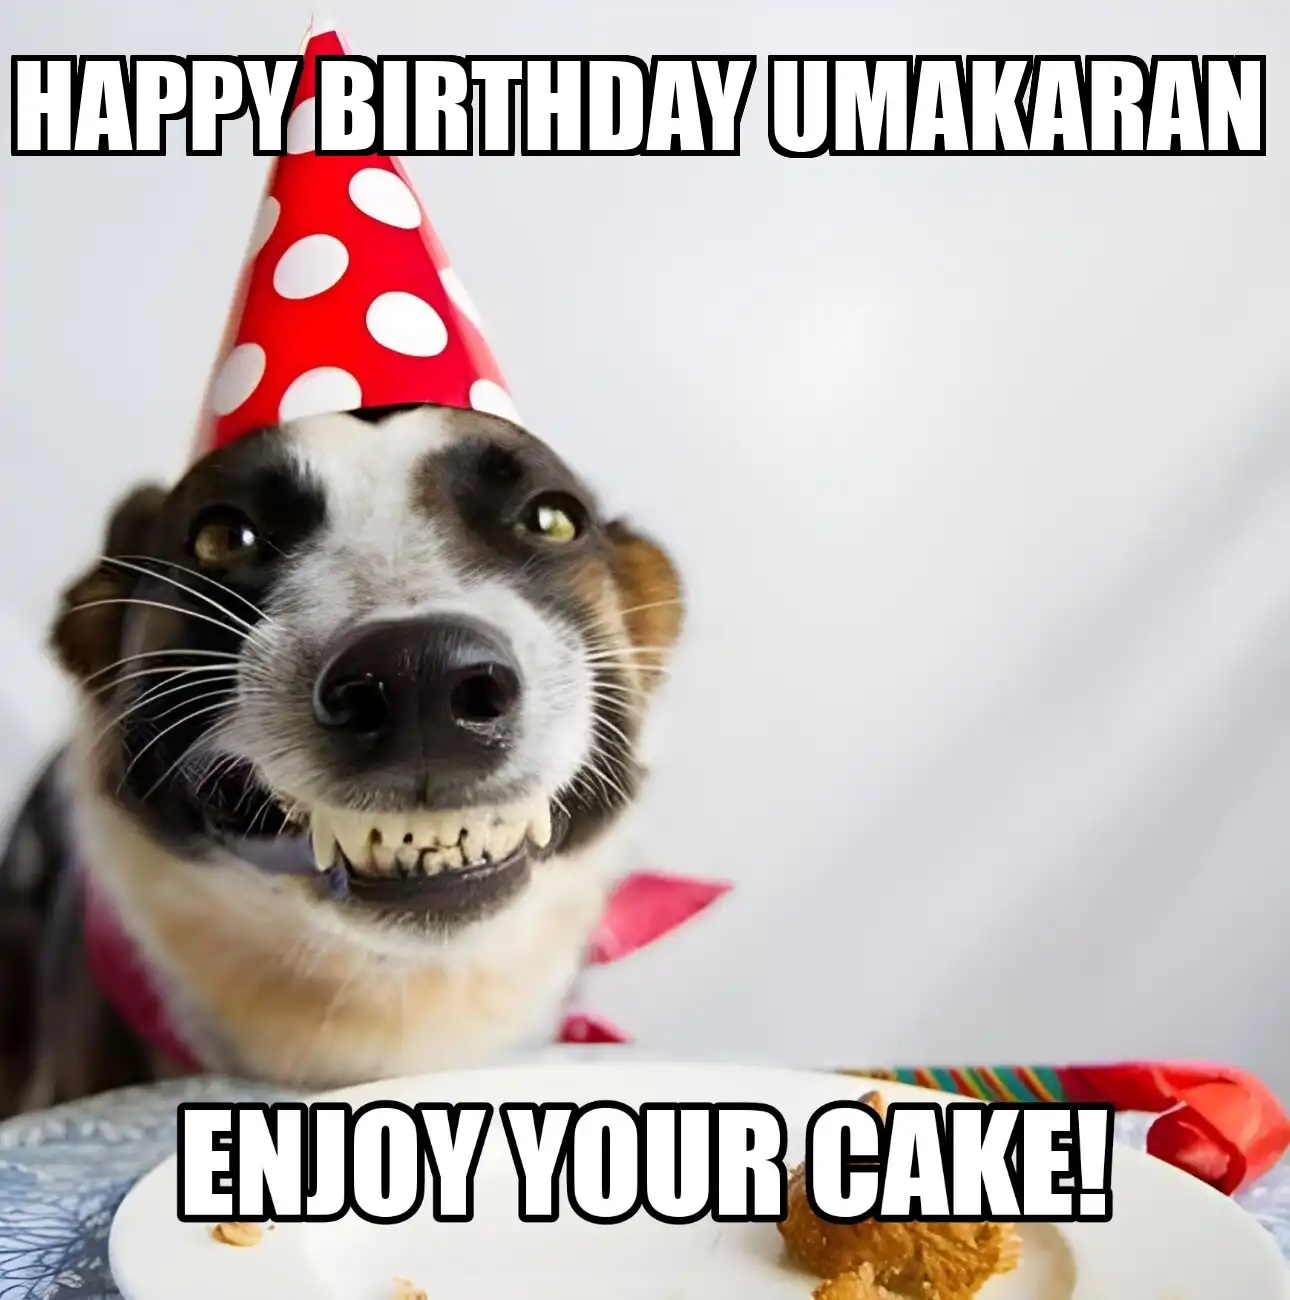 Happy Birthday Umakaran Enjoy Your Cake Dog Meme